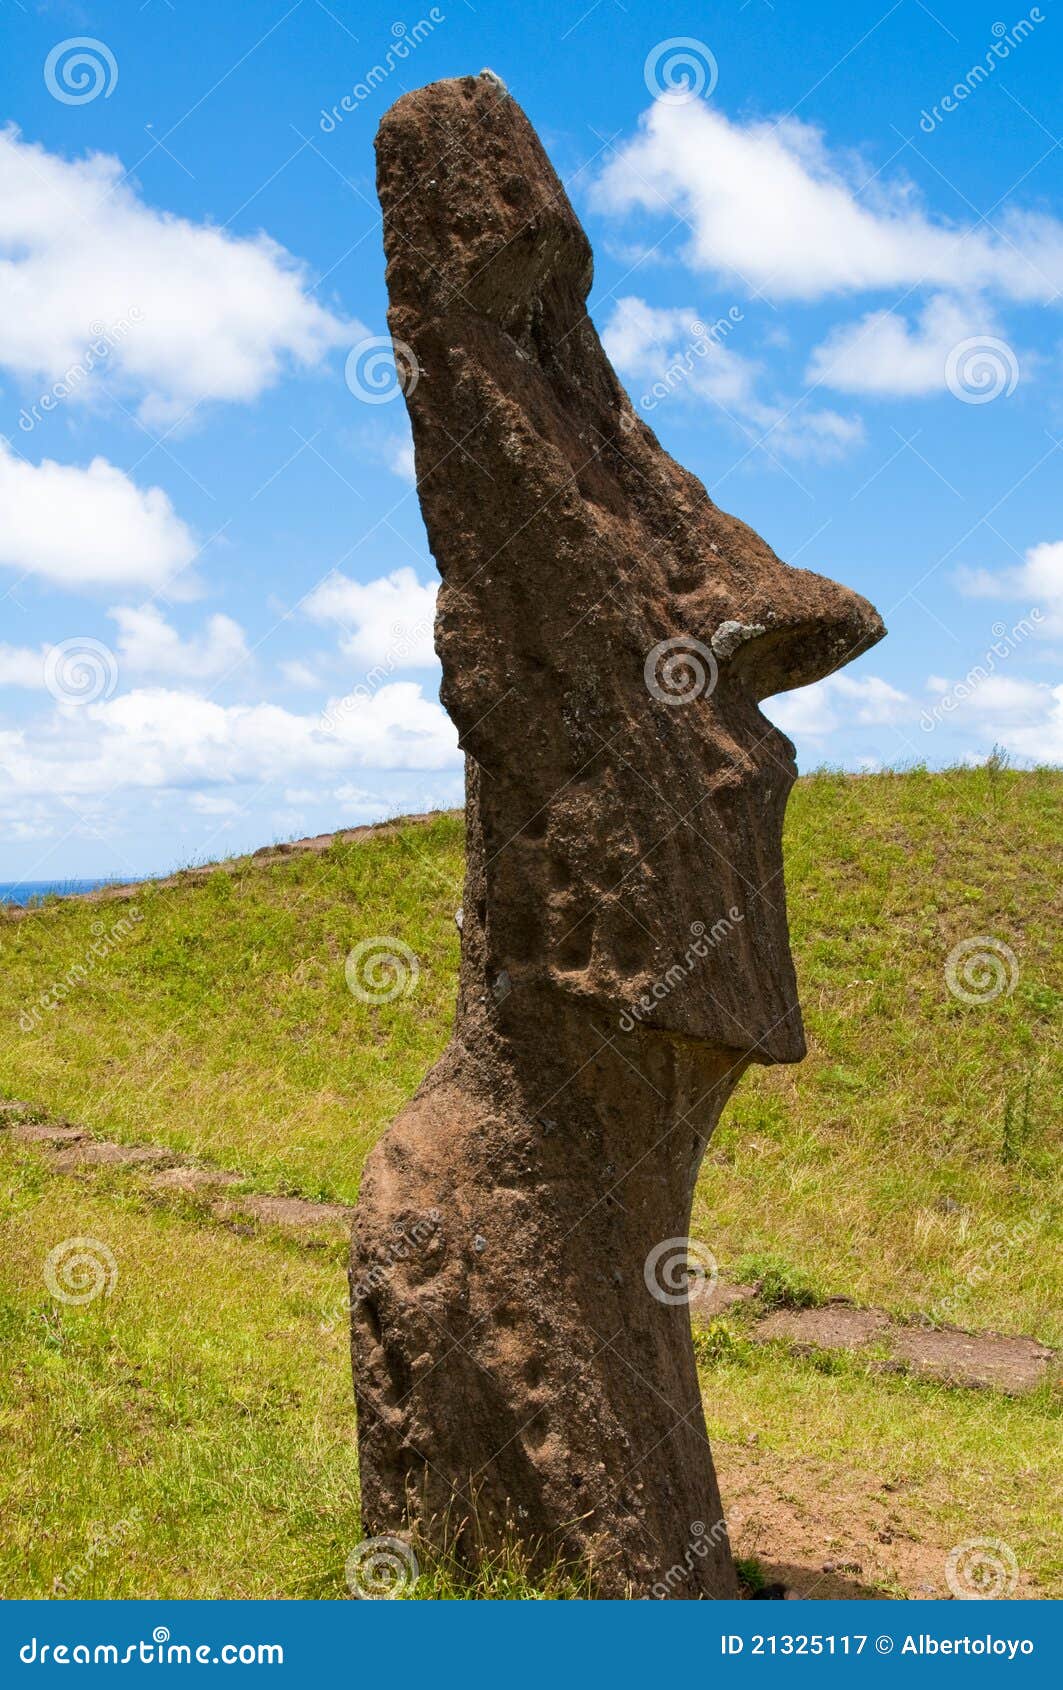 moai at rano raraku, easter island